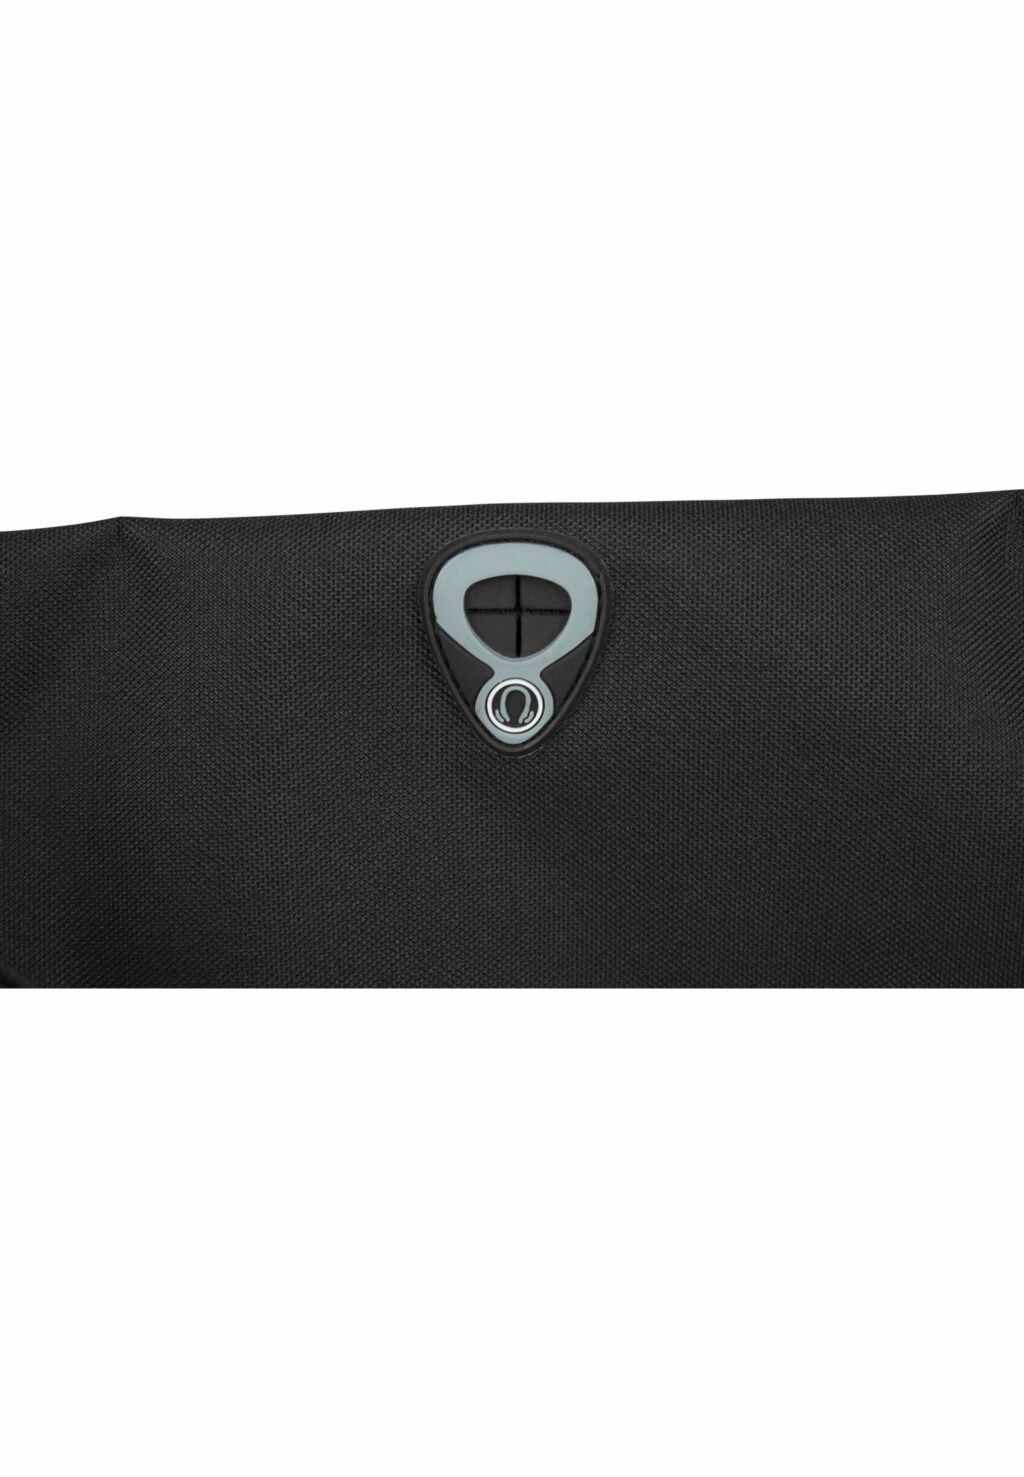 Double-Zip Shoulder Bag blk/blk one TB1692